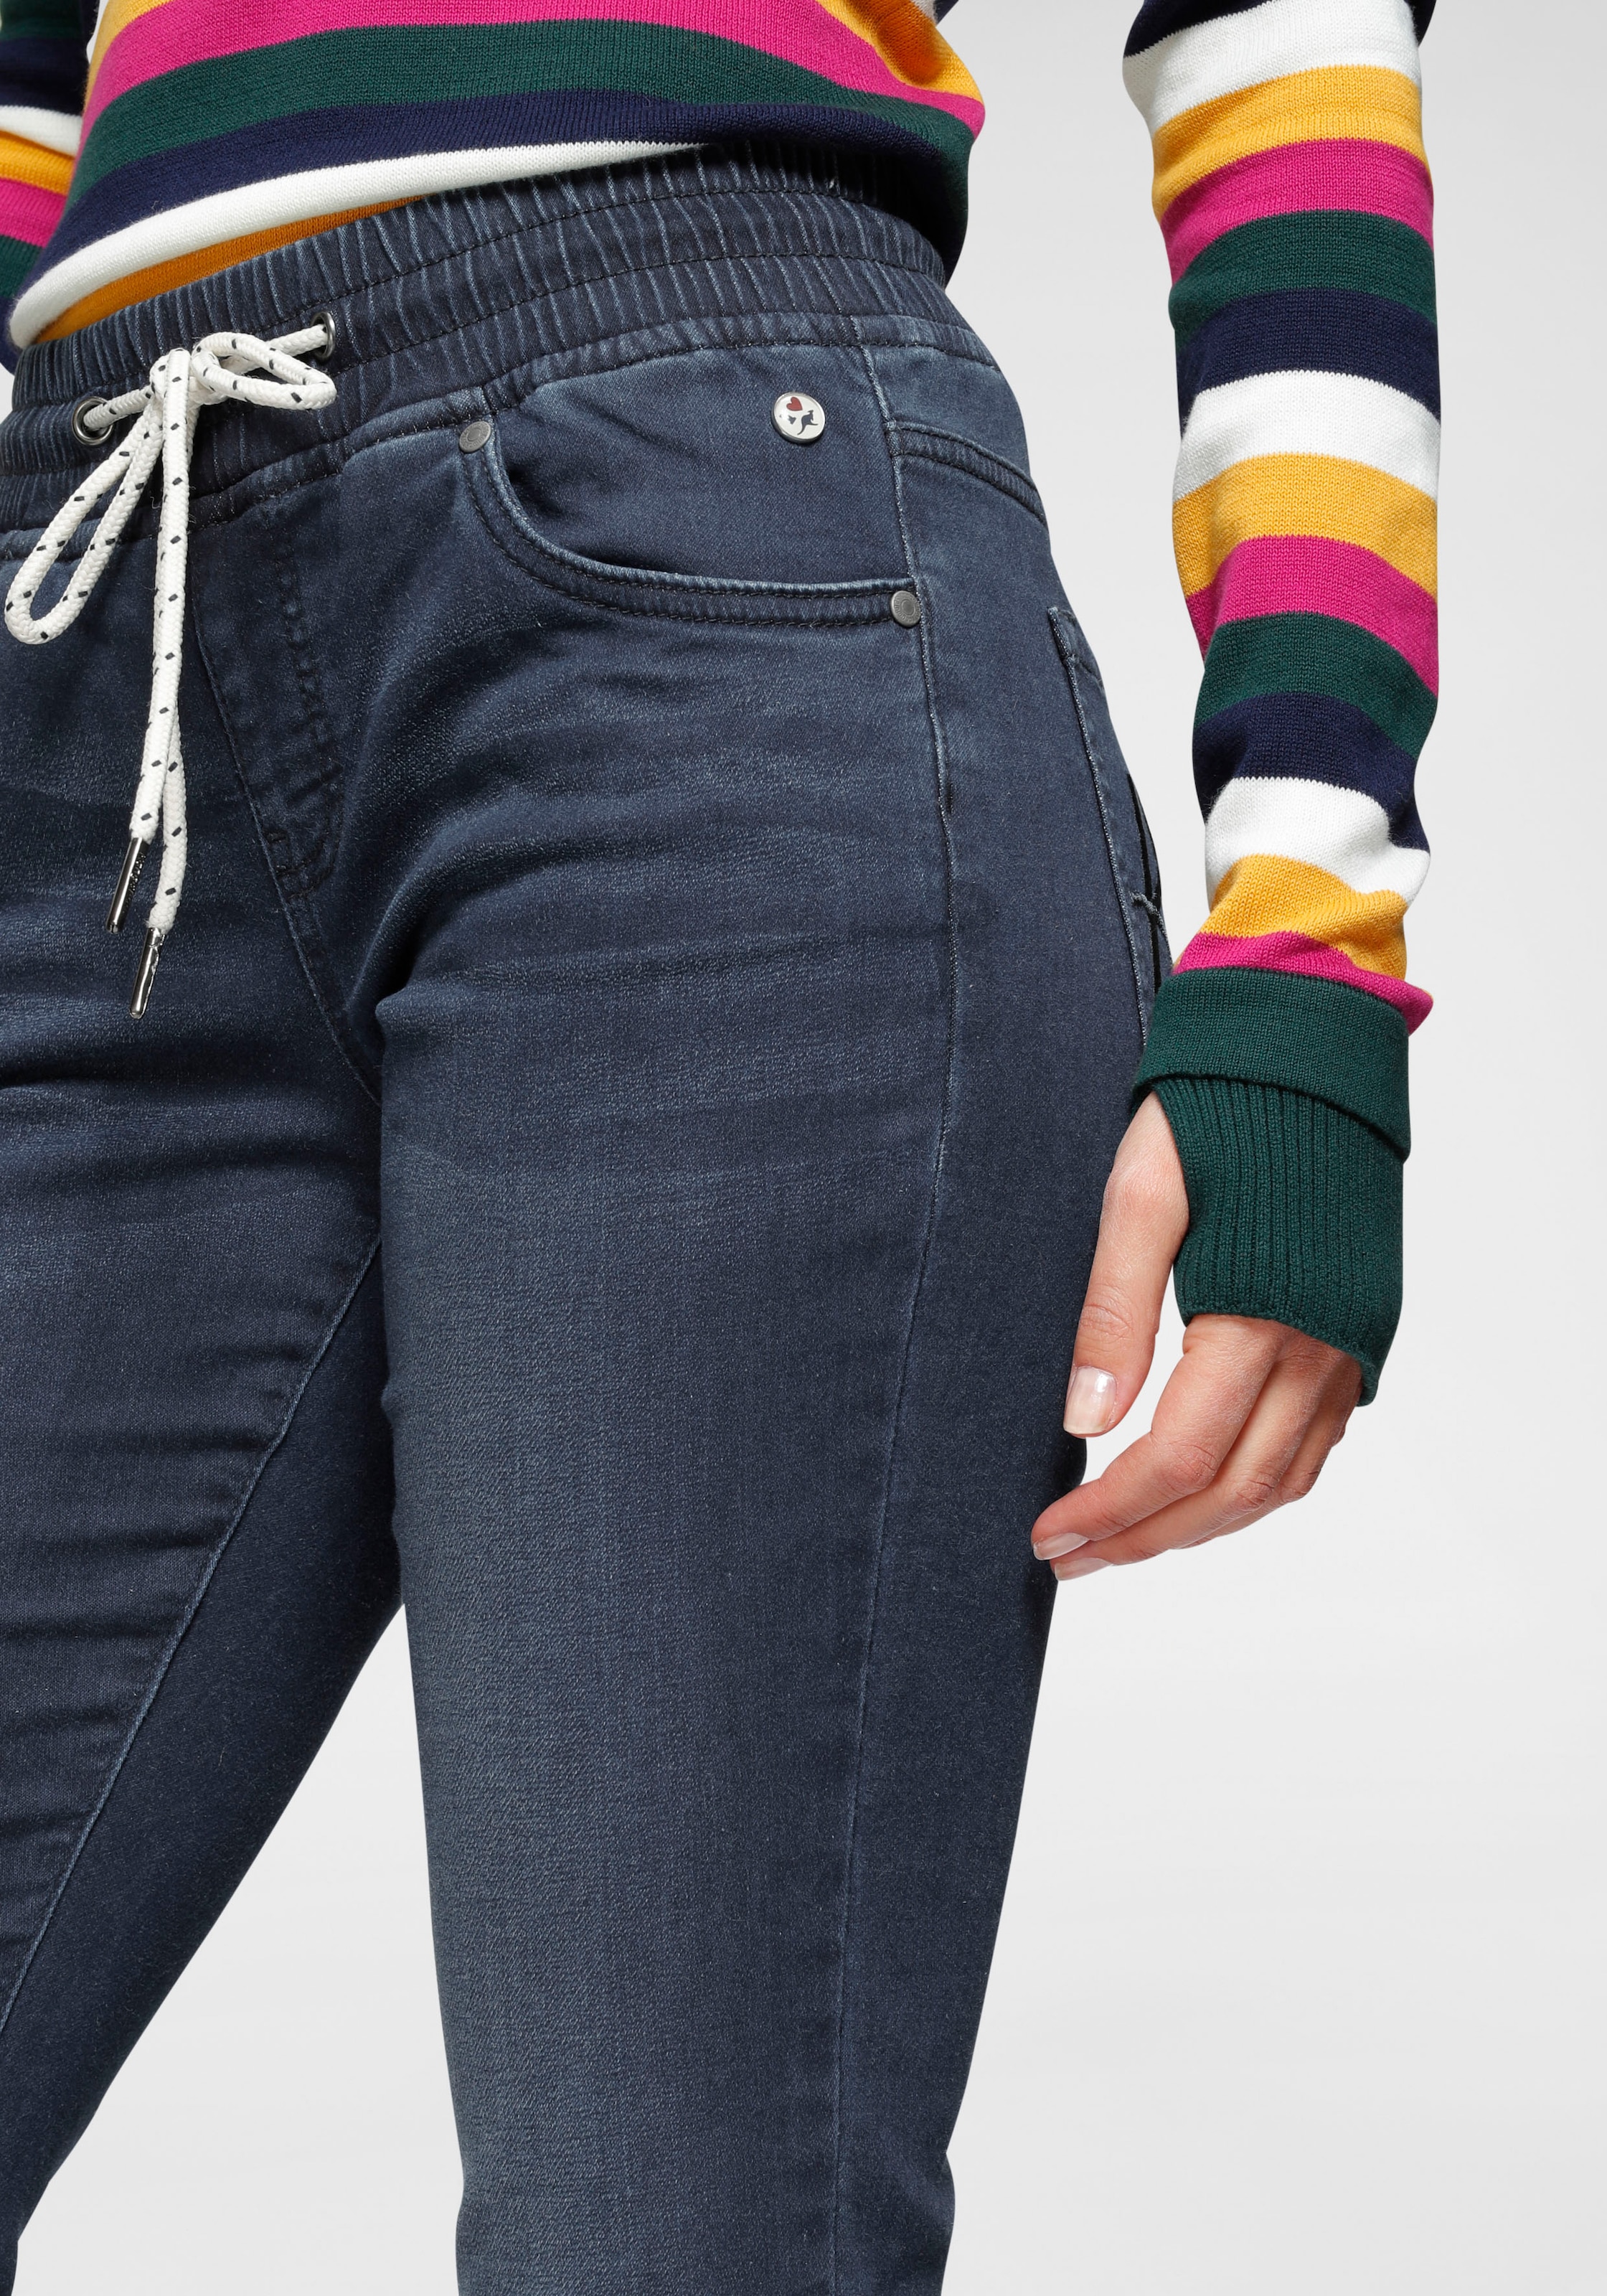 KangaROOS Online-Shop Jeans im Bequeme bestellen